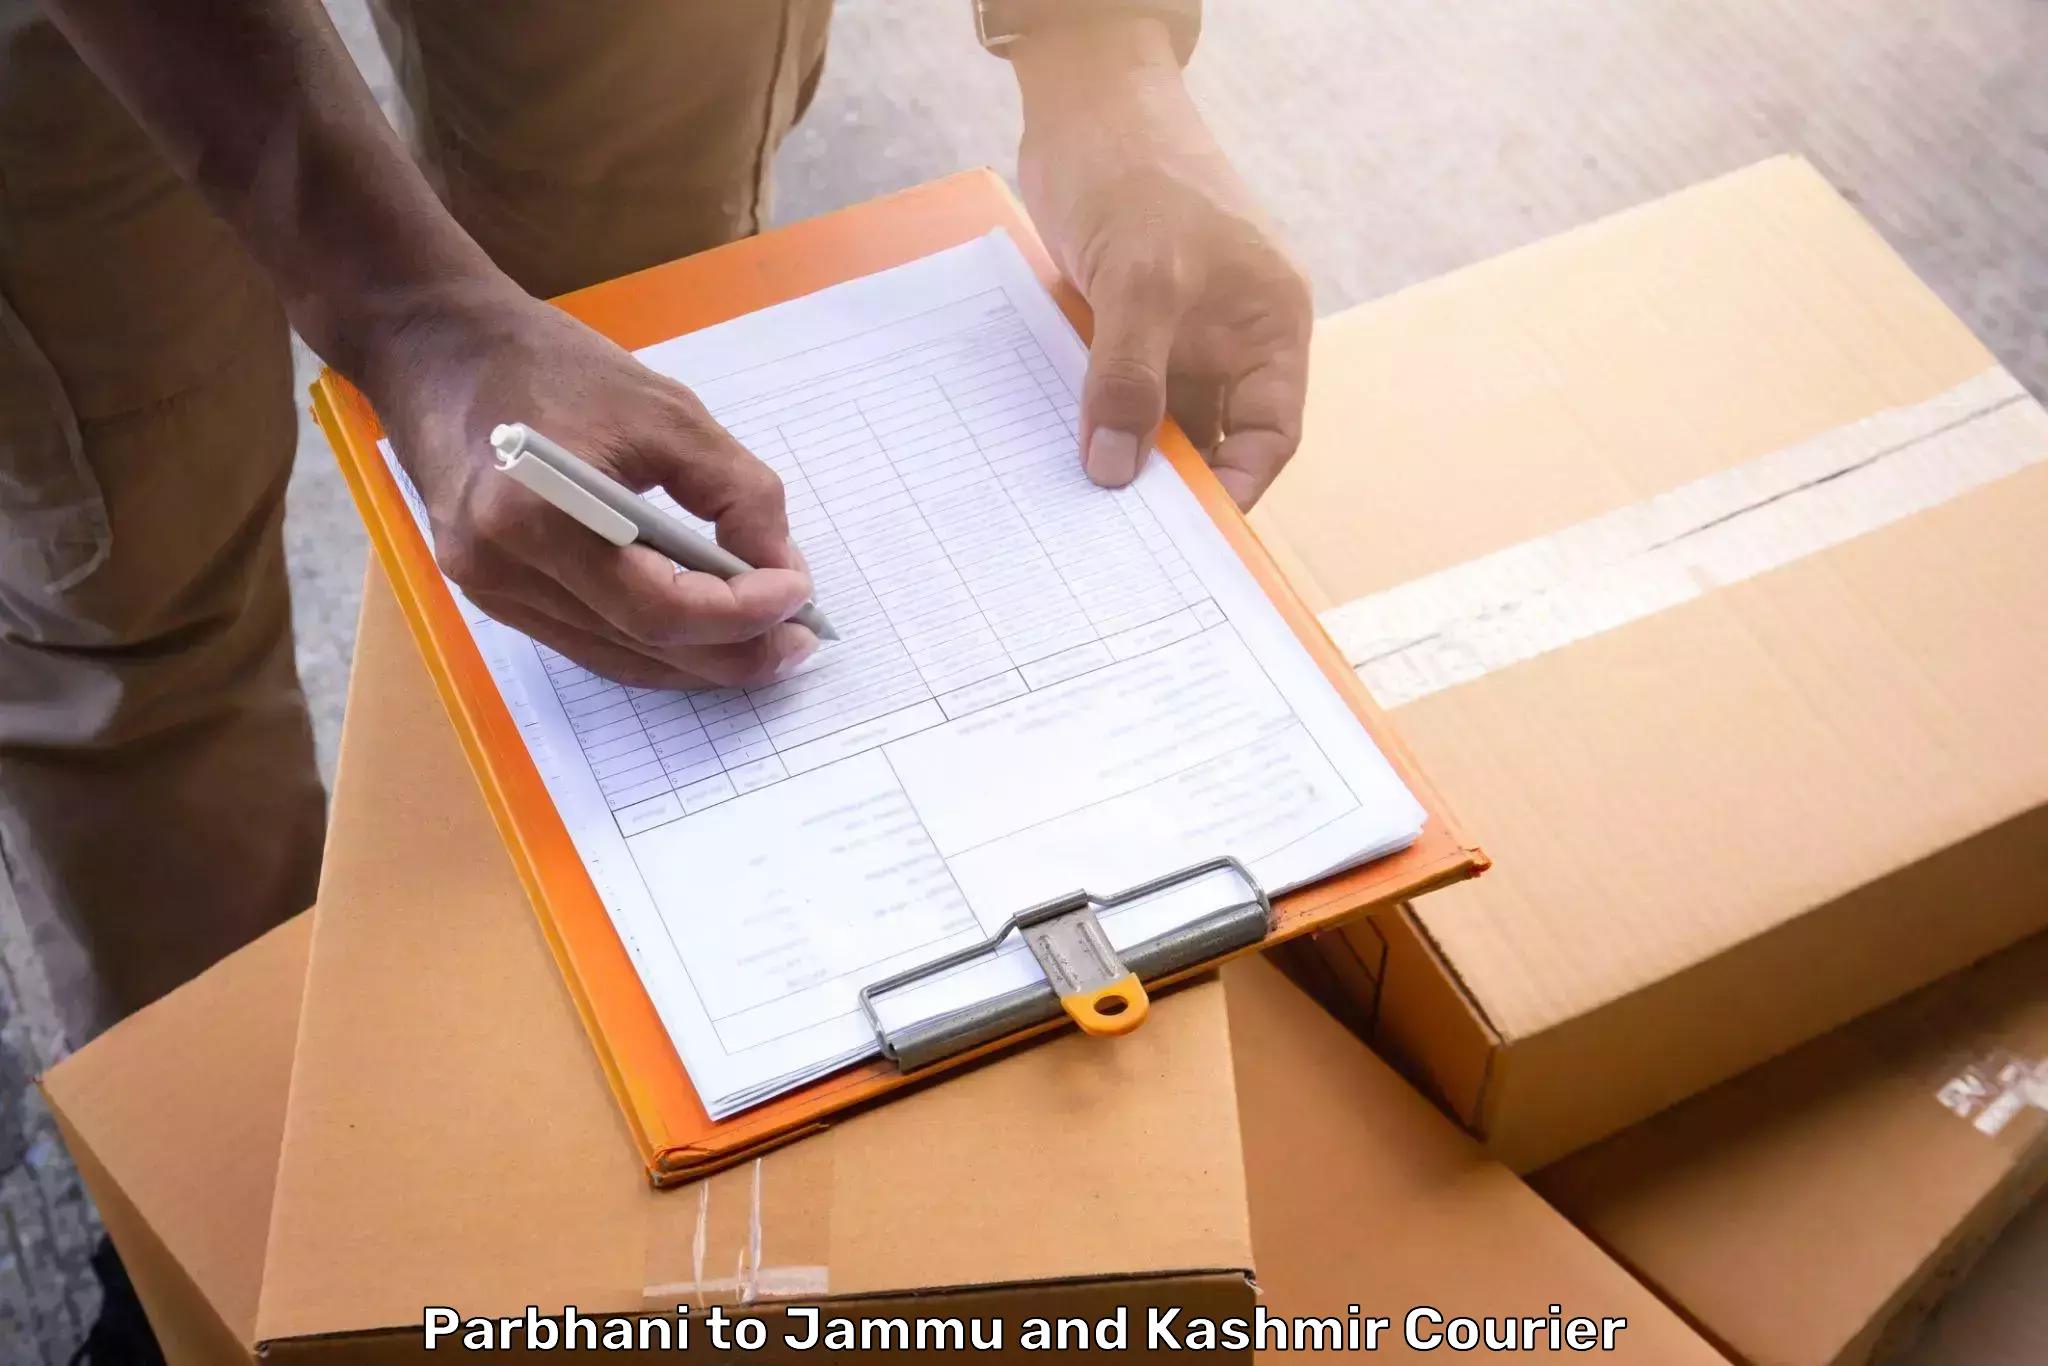 Baggage relocation service Parbhani to University of Jammu